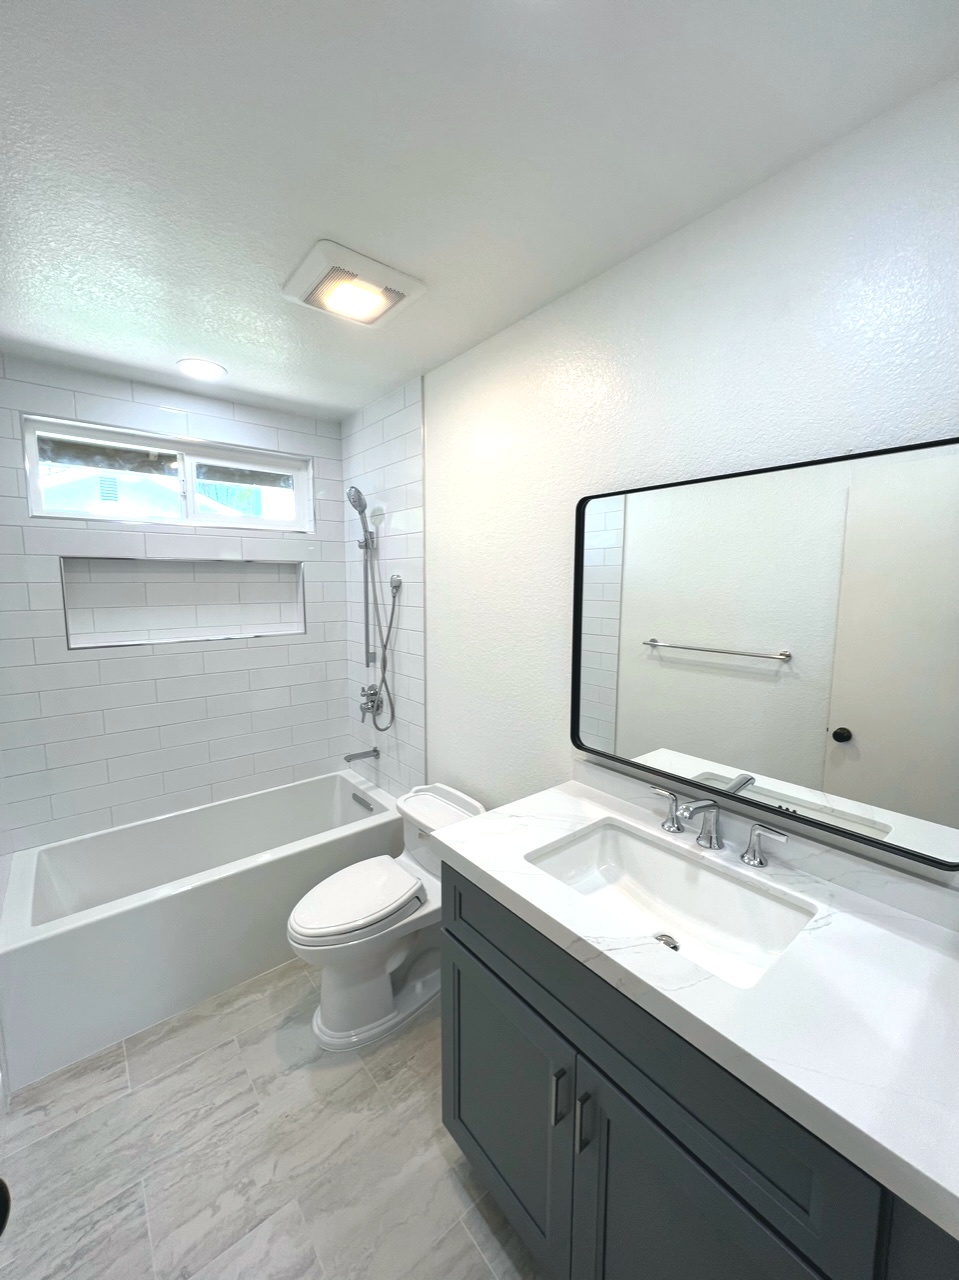 Bath C 1 - Kitchen & Bathroom Remodel in Scripps Ranch, CA